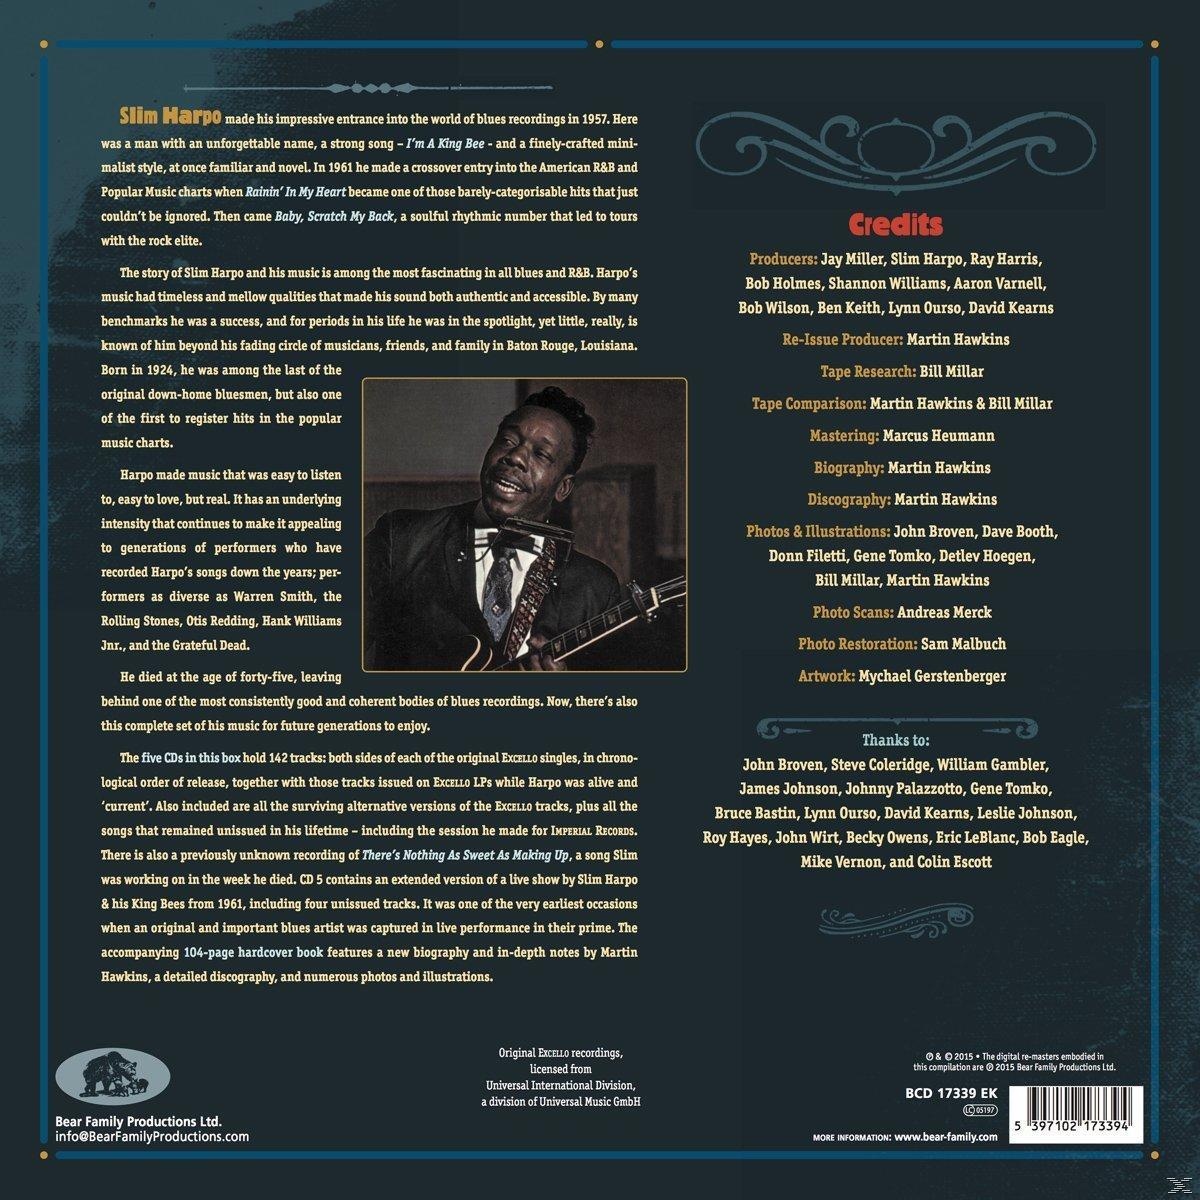 Buzzin\' (CD) - Slim Slim The Complete Harpo - Blues-The Harpo 5-CD